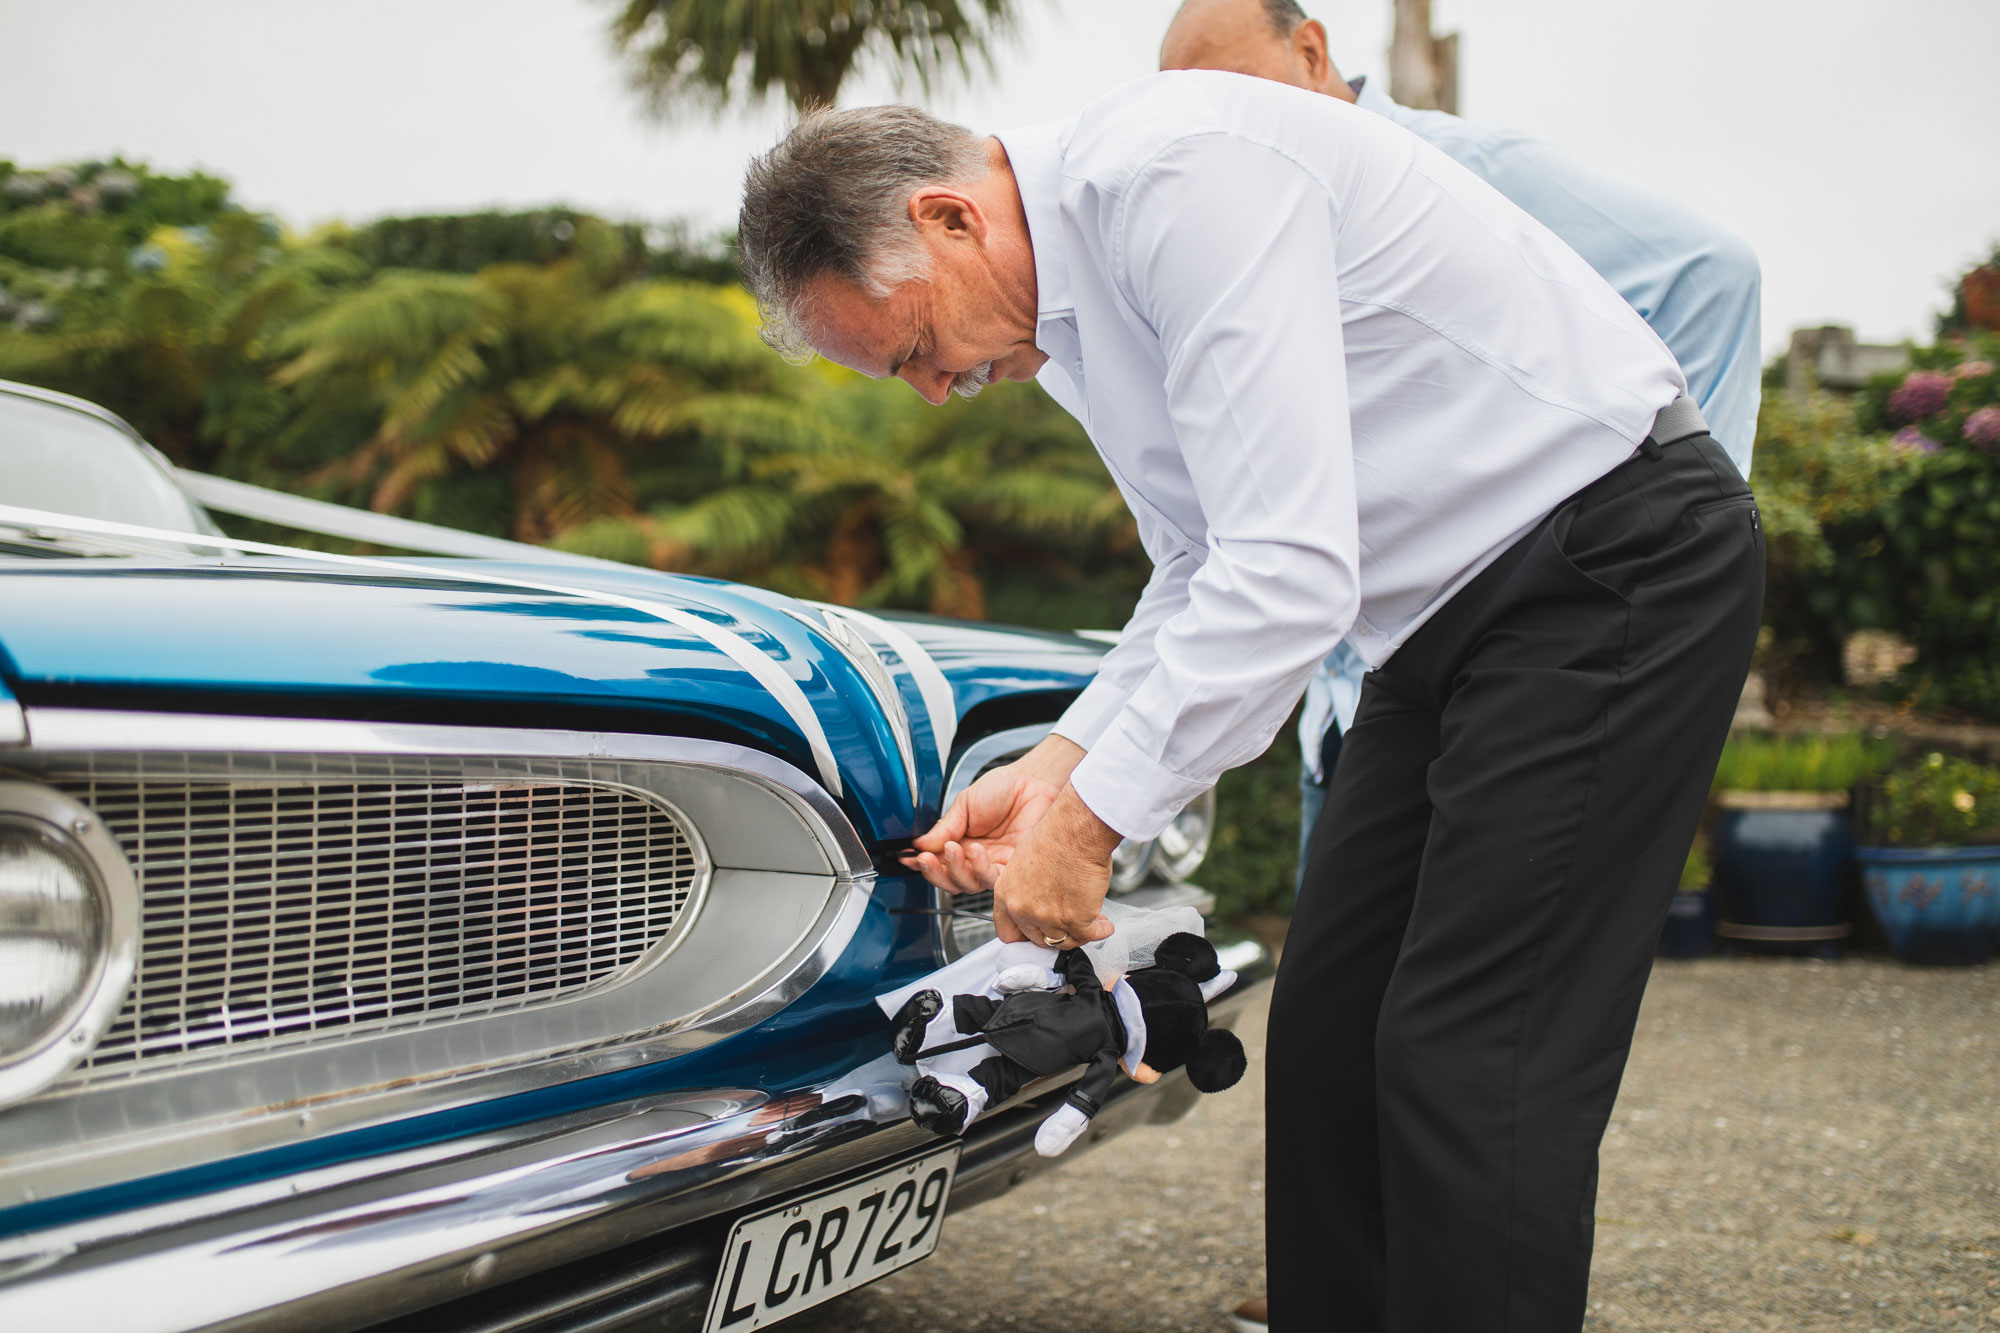 auckland wedding father decorating car